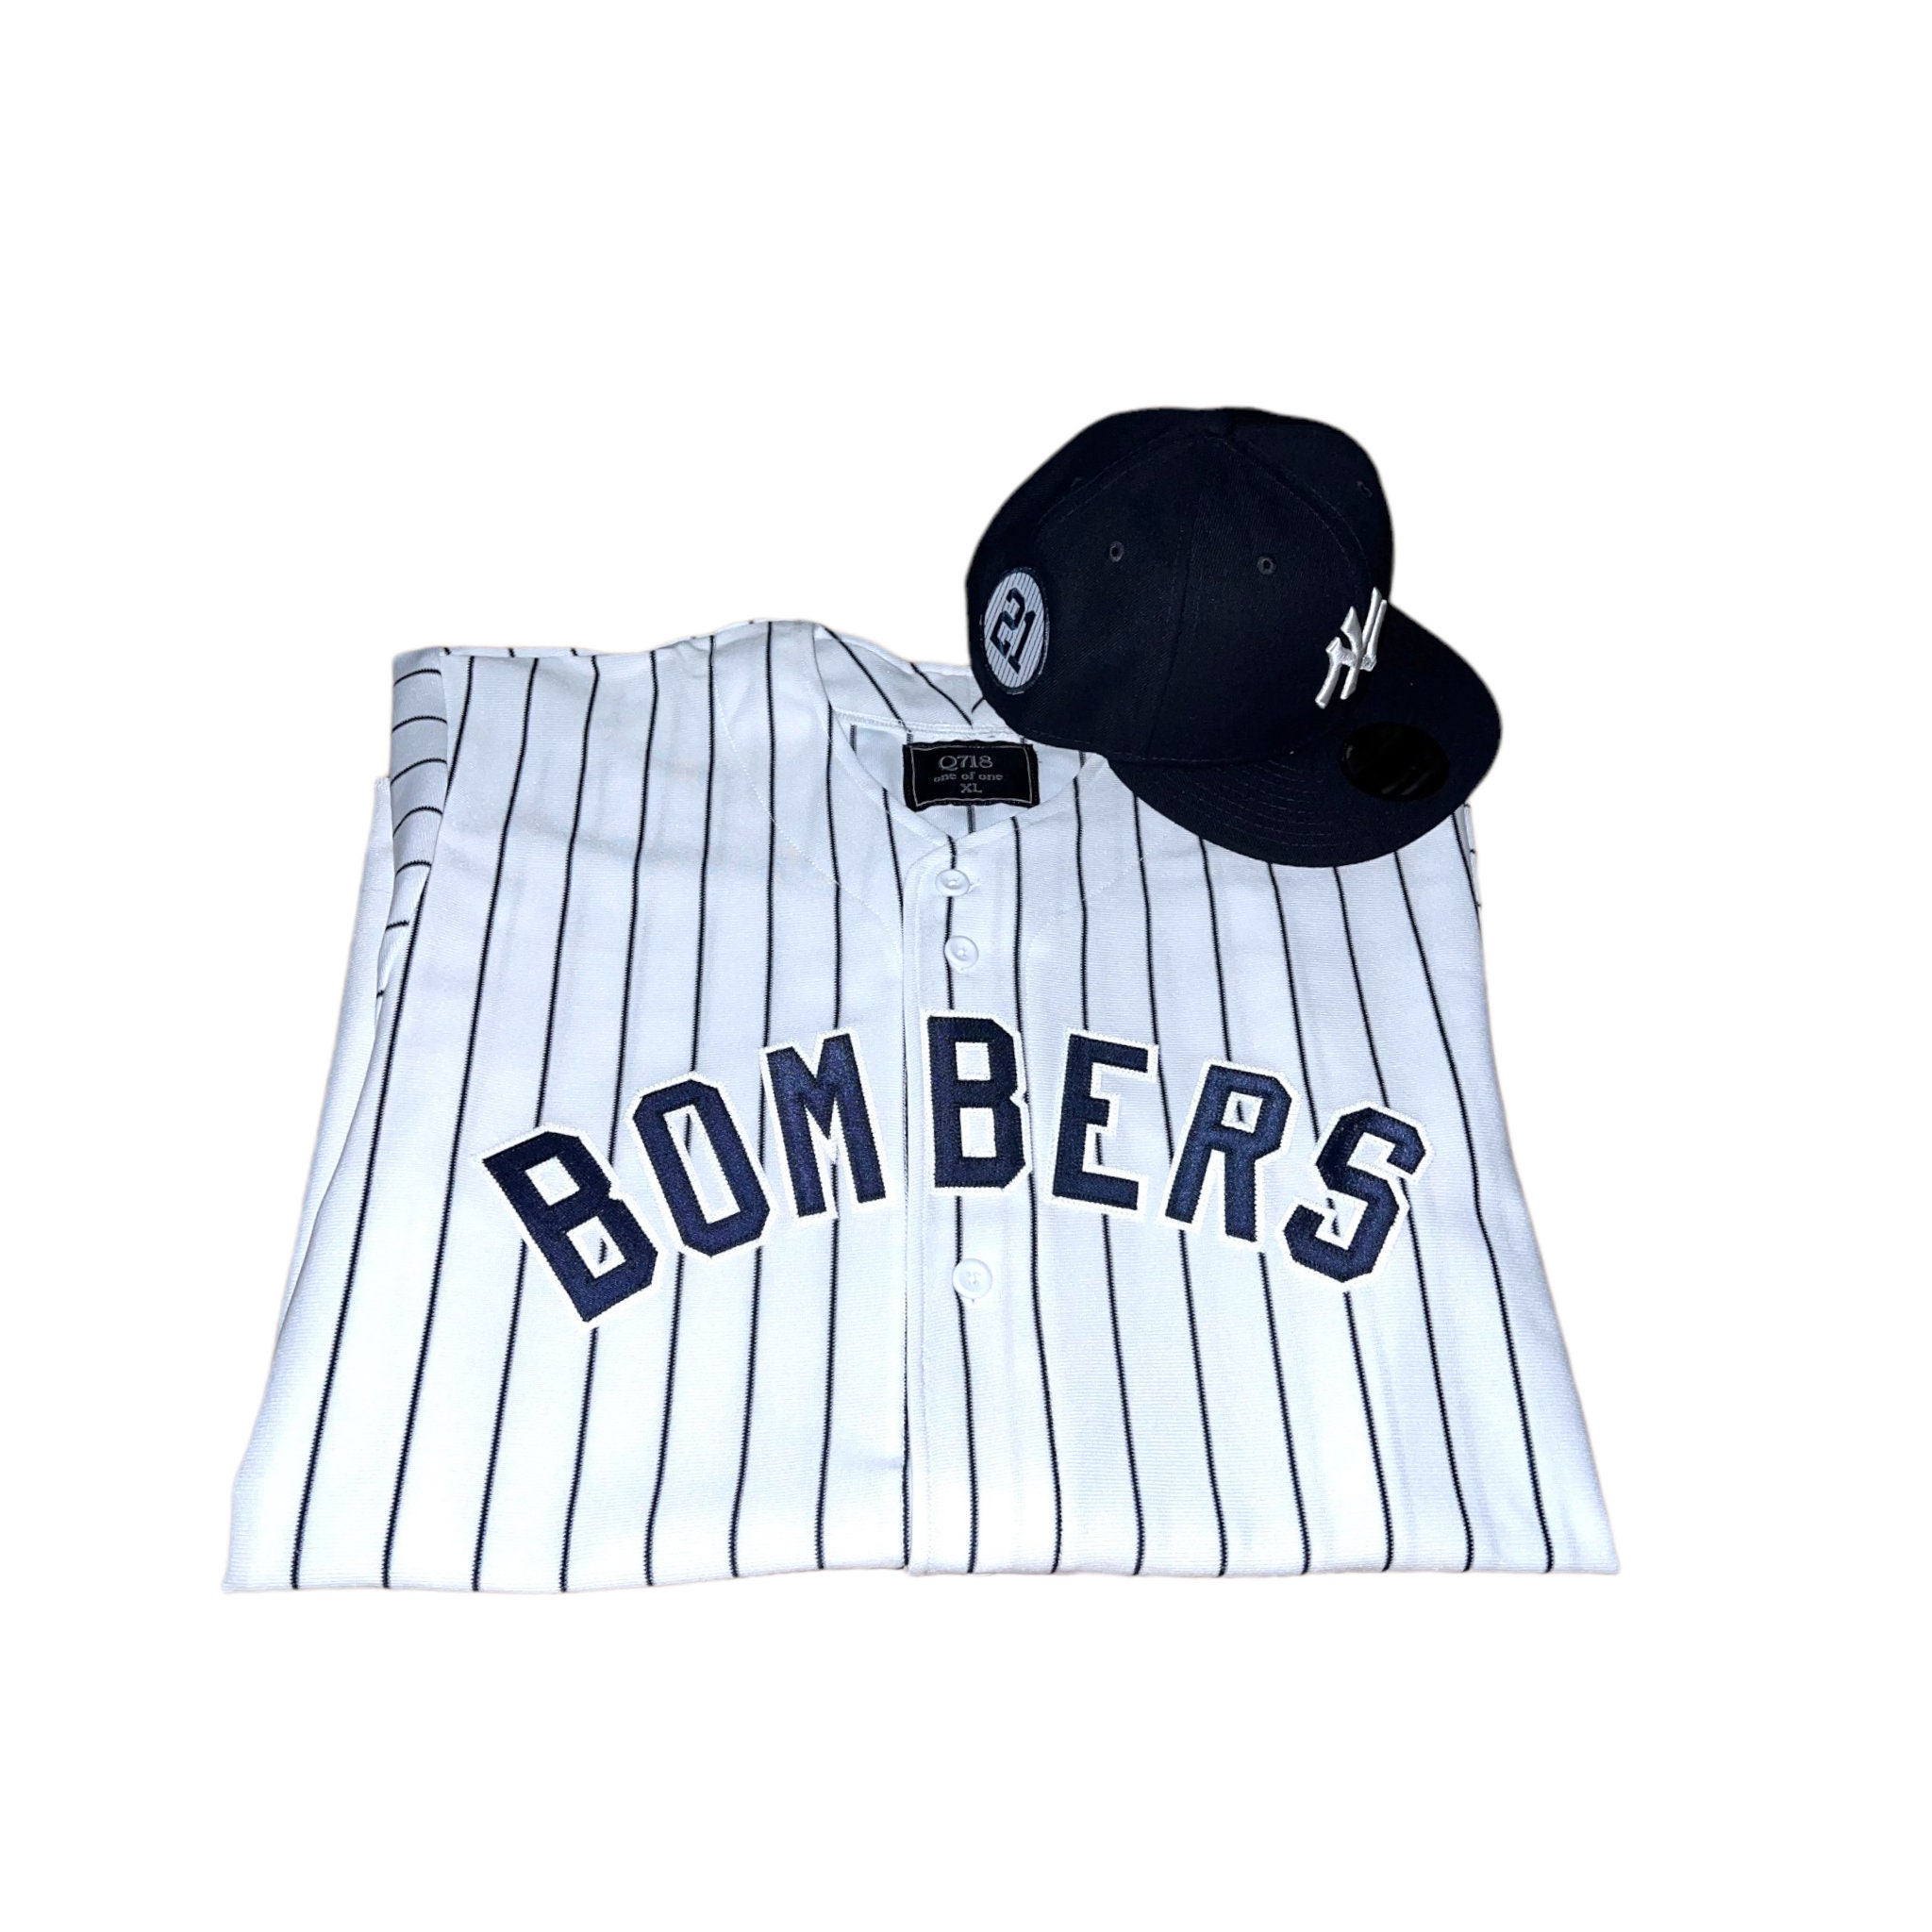 New York Bronx Bombers Baseball Jersey 